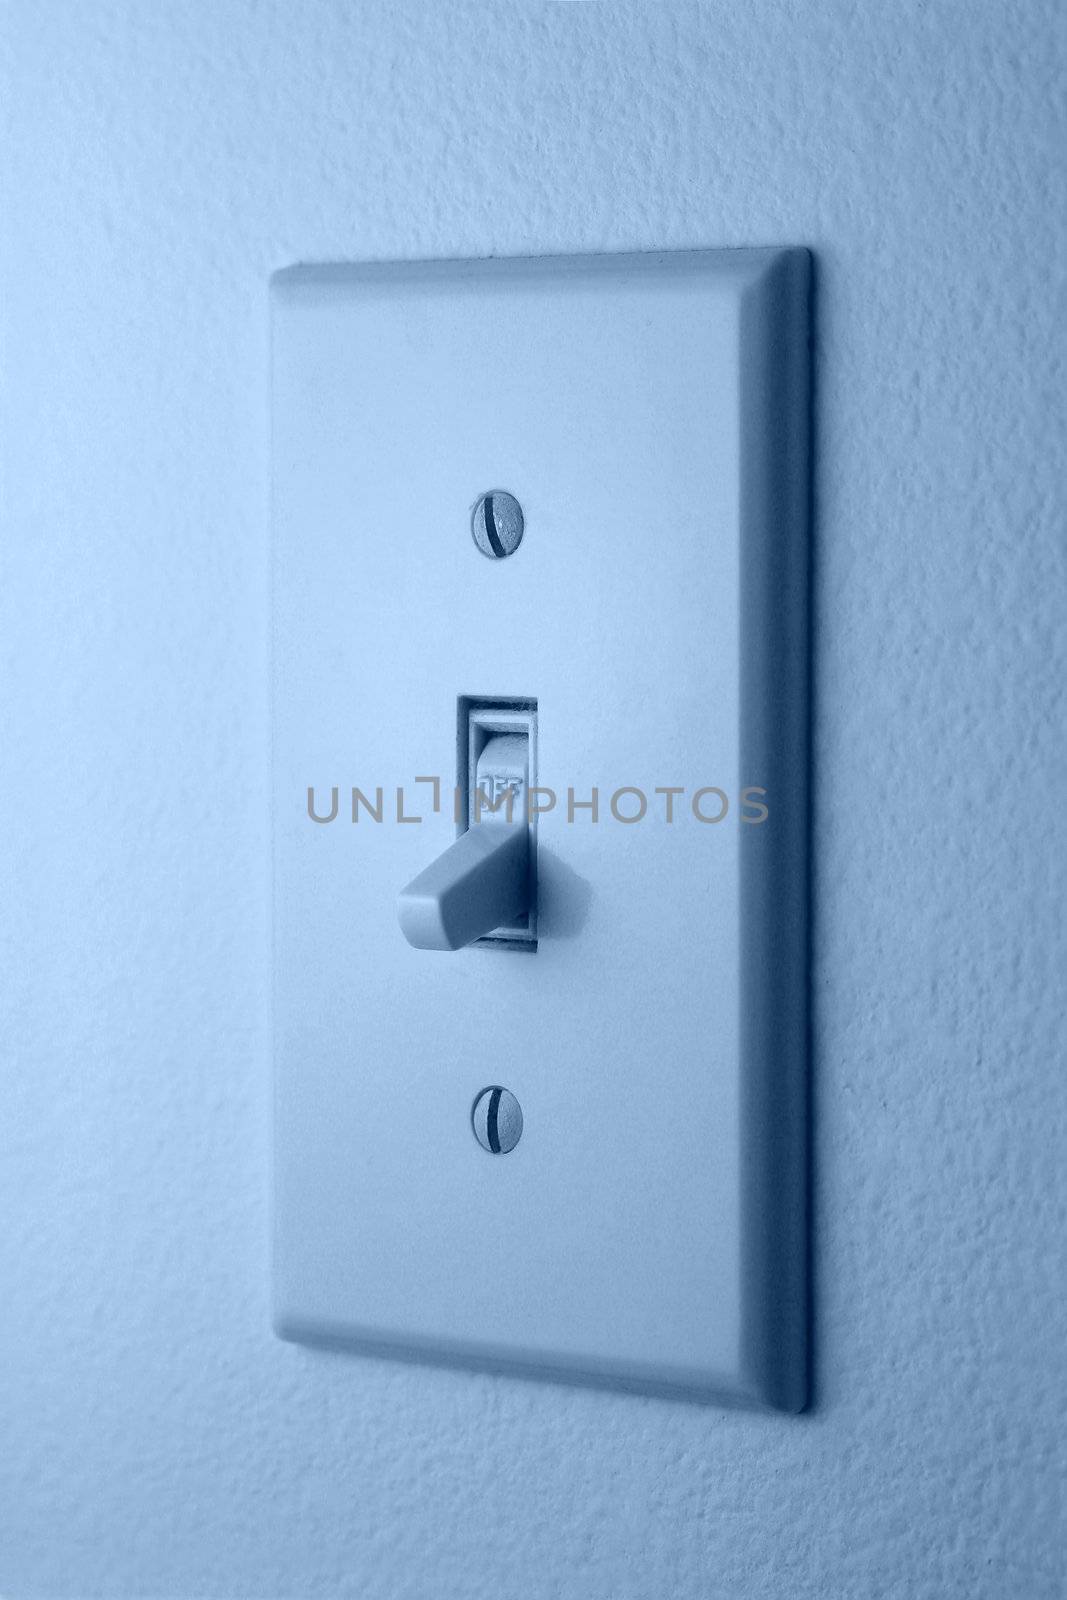 
Blue light switch
